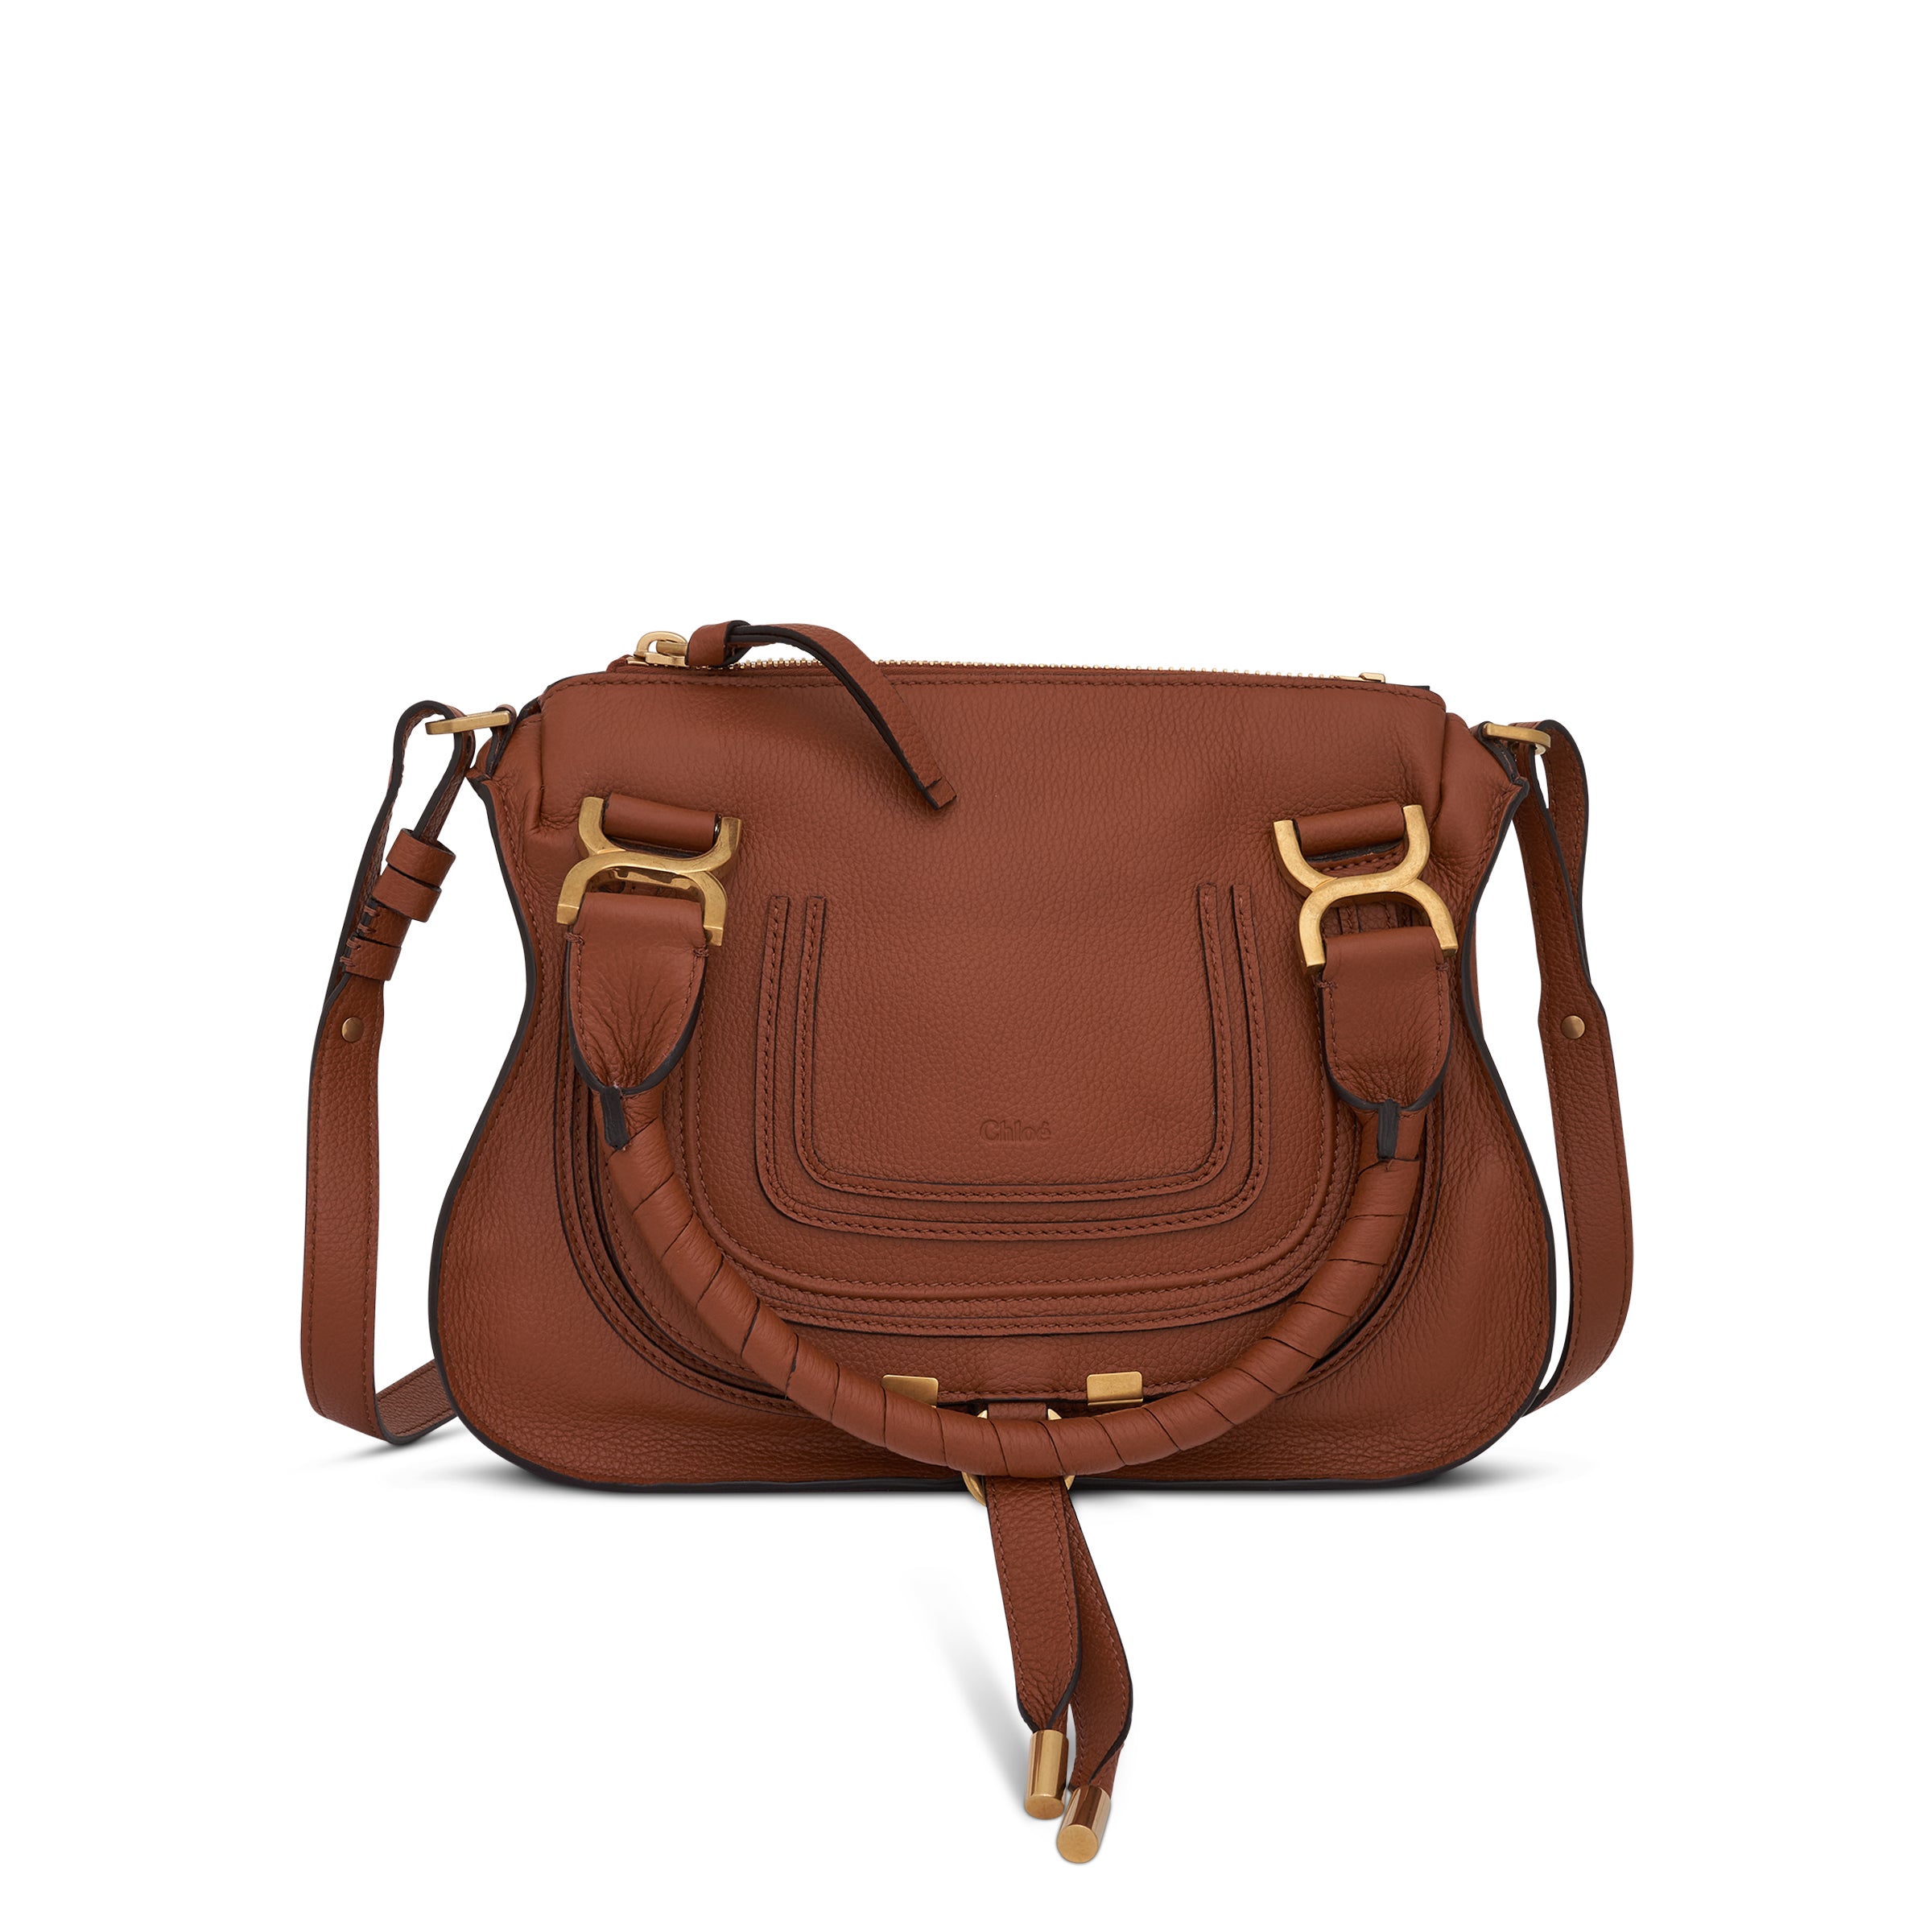 Chloé Designer Bags - Luxury Brands and Designer Fashion